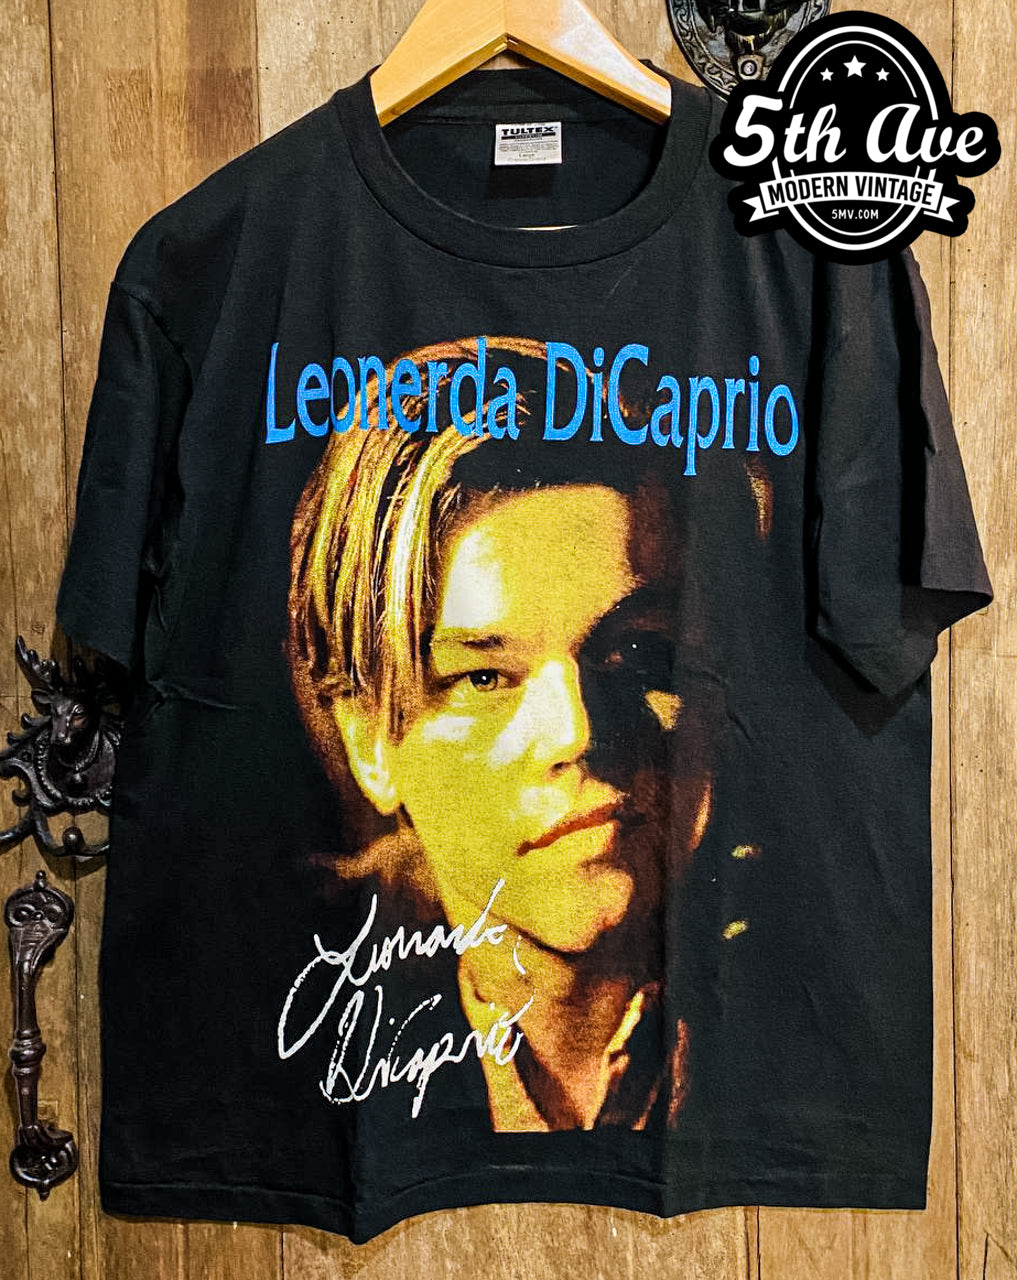 Titanic Leonardo DiCaprio - New Vintage Movie T shirt